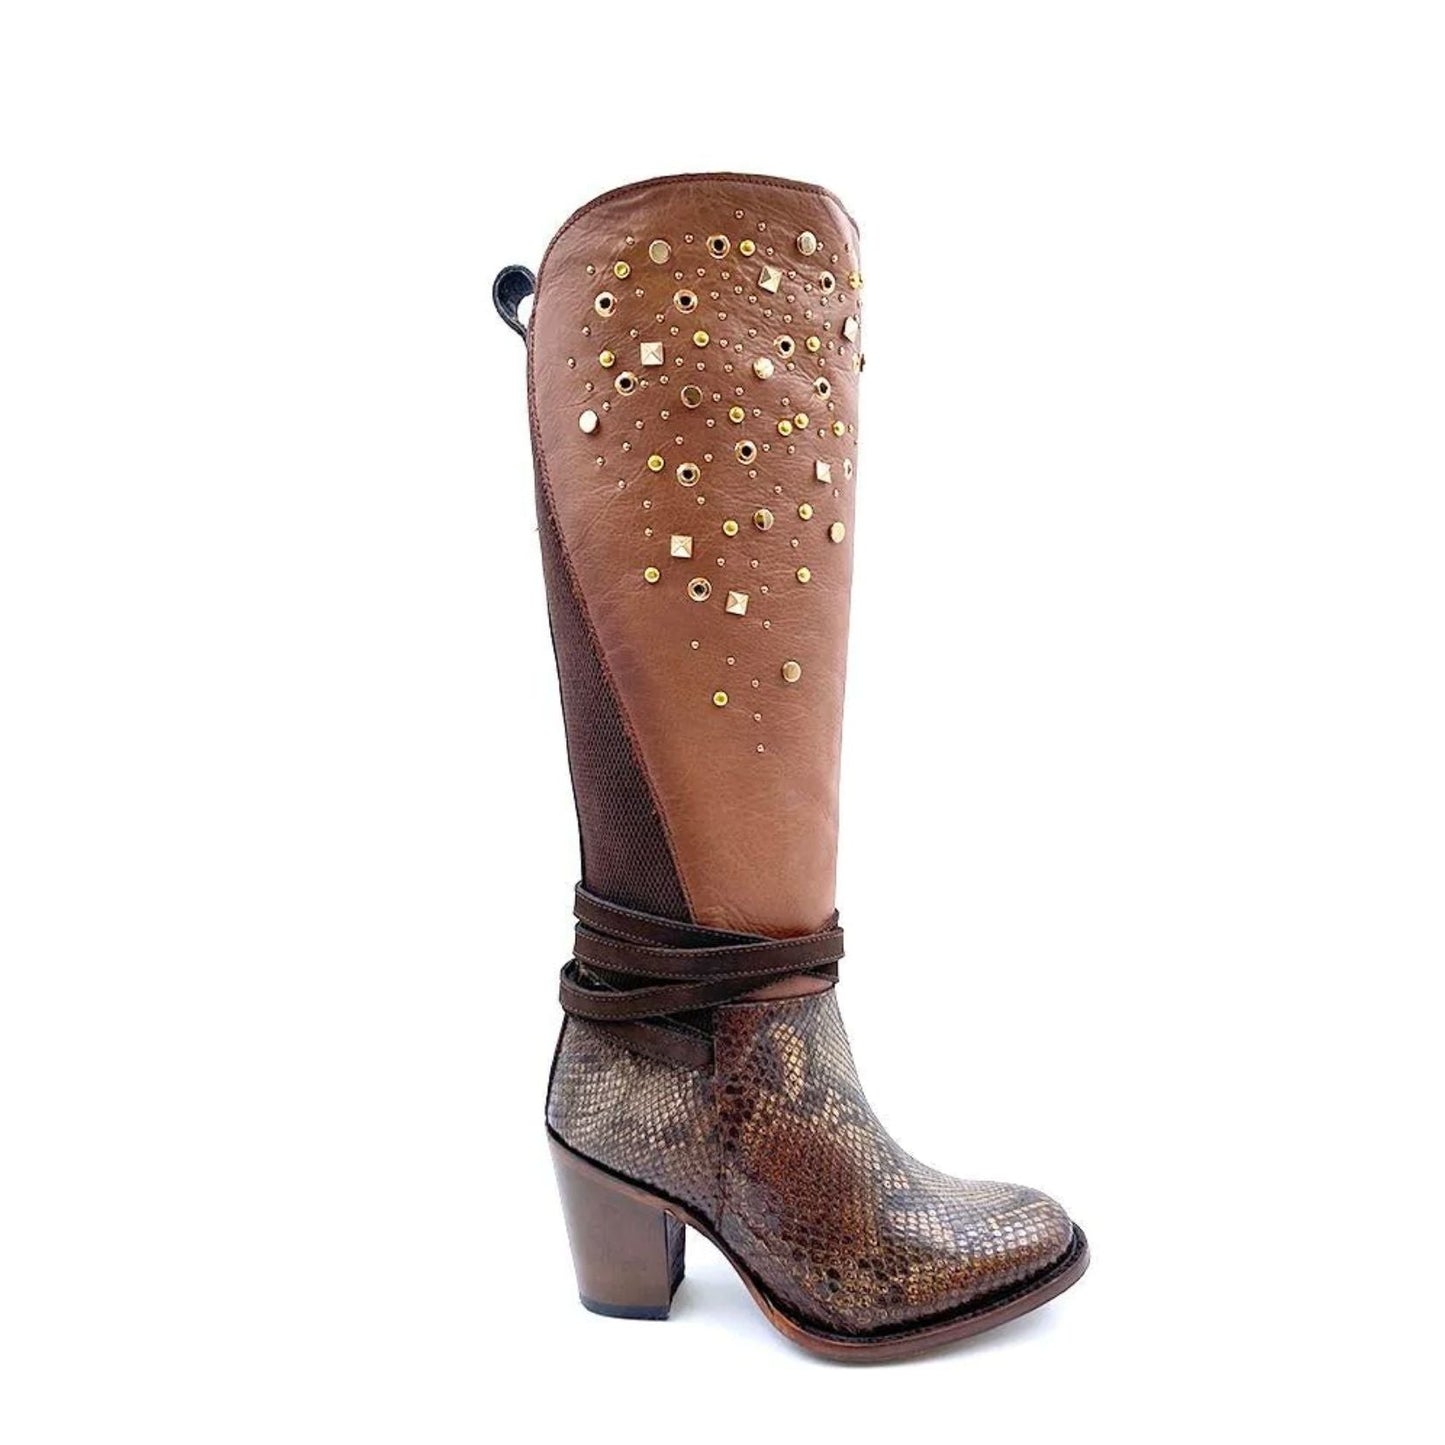 3W03PH - Cuadra brown western cowgirl python skin knee high boots for women-Kuet.us